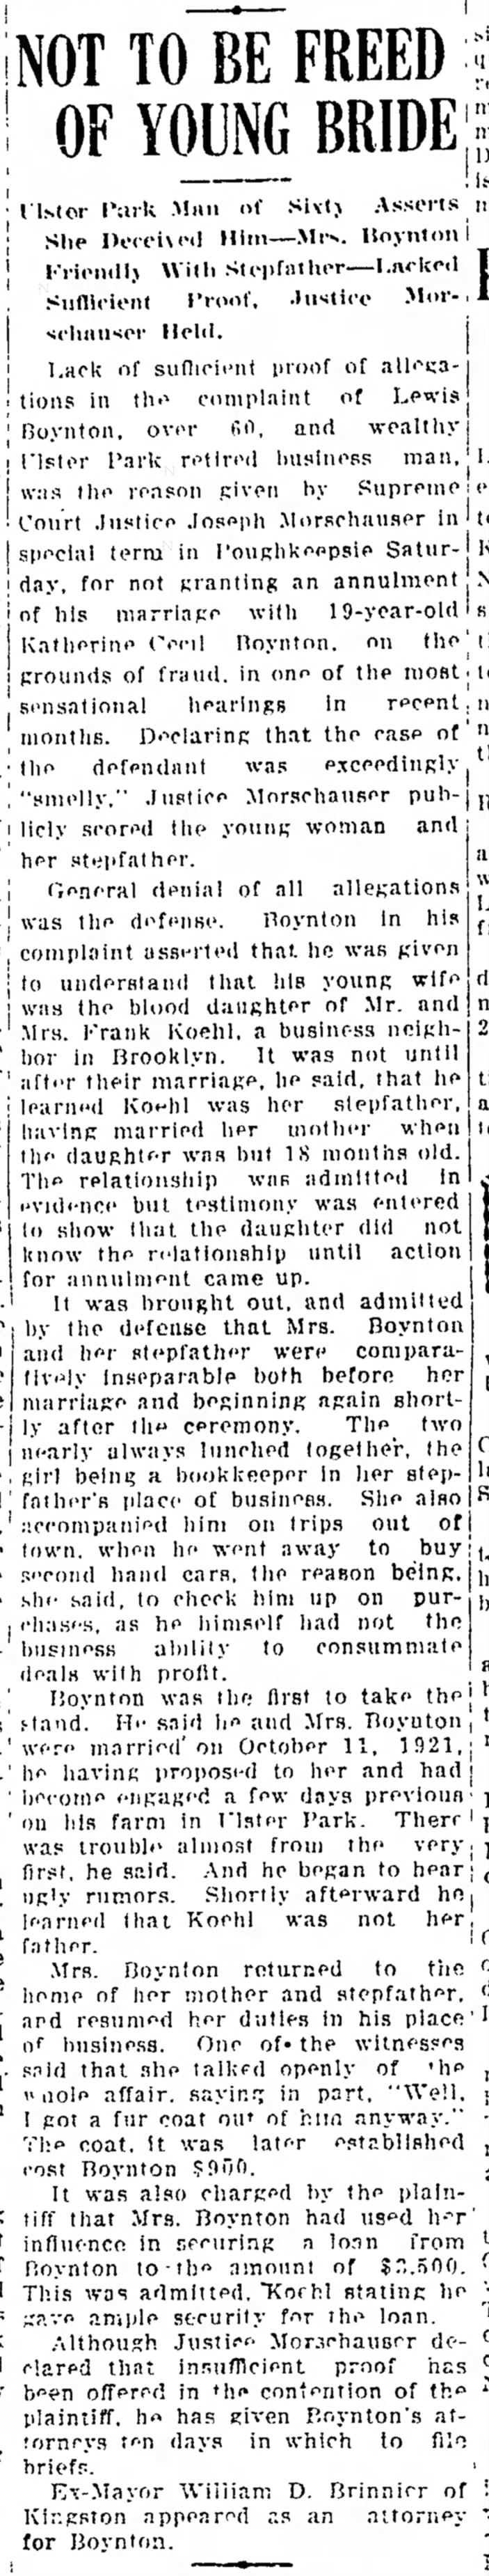 Katherine Boynton - Kingston Daily Freeman - 09/26/1922